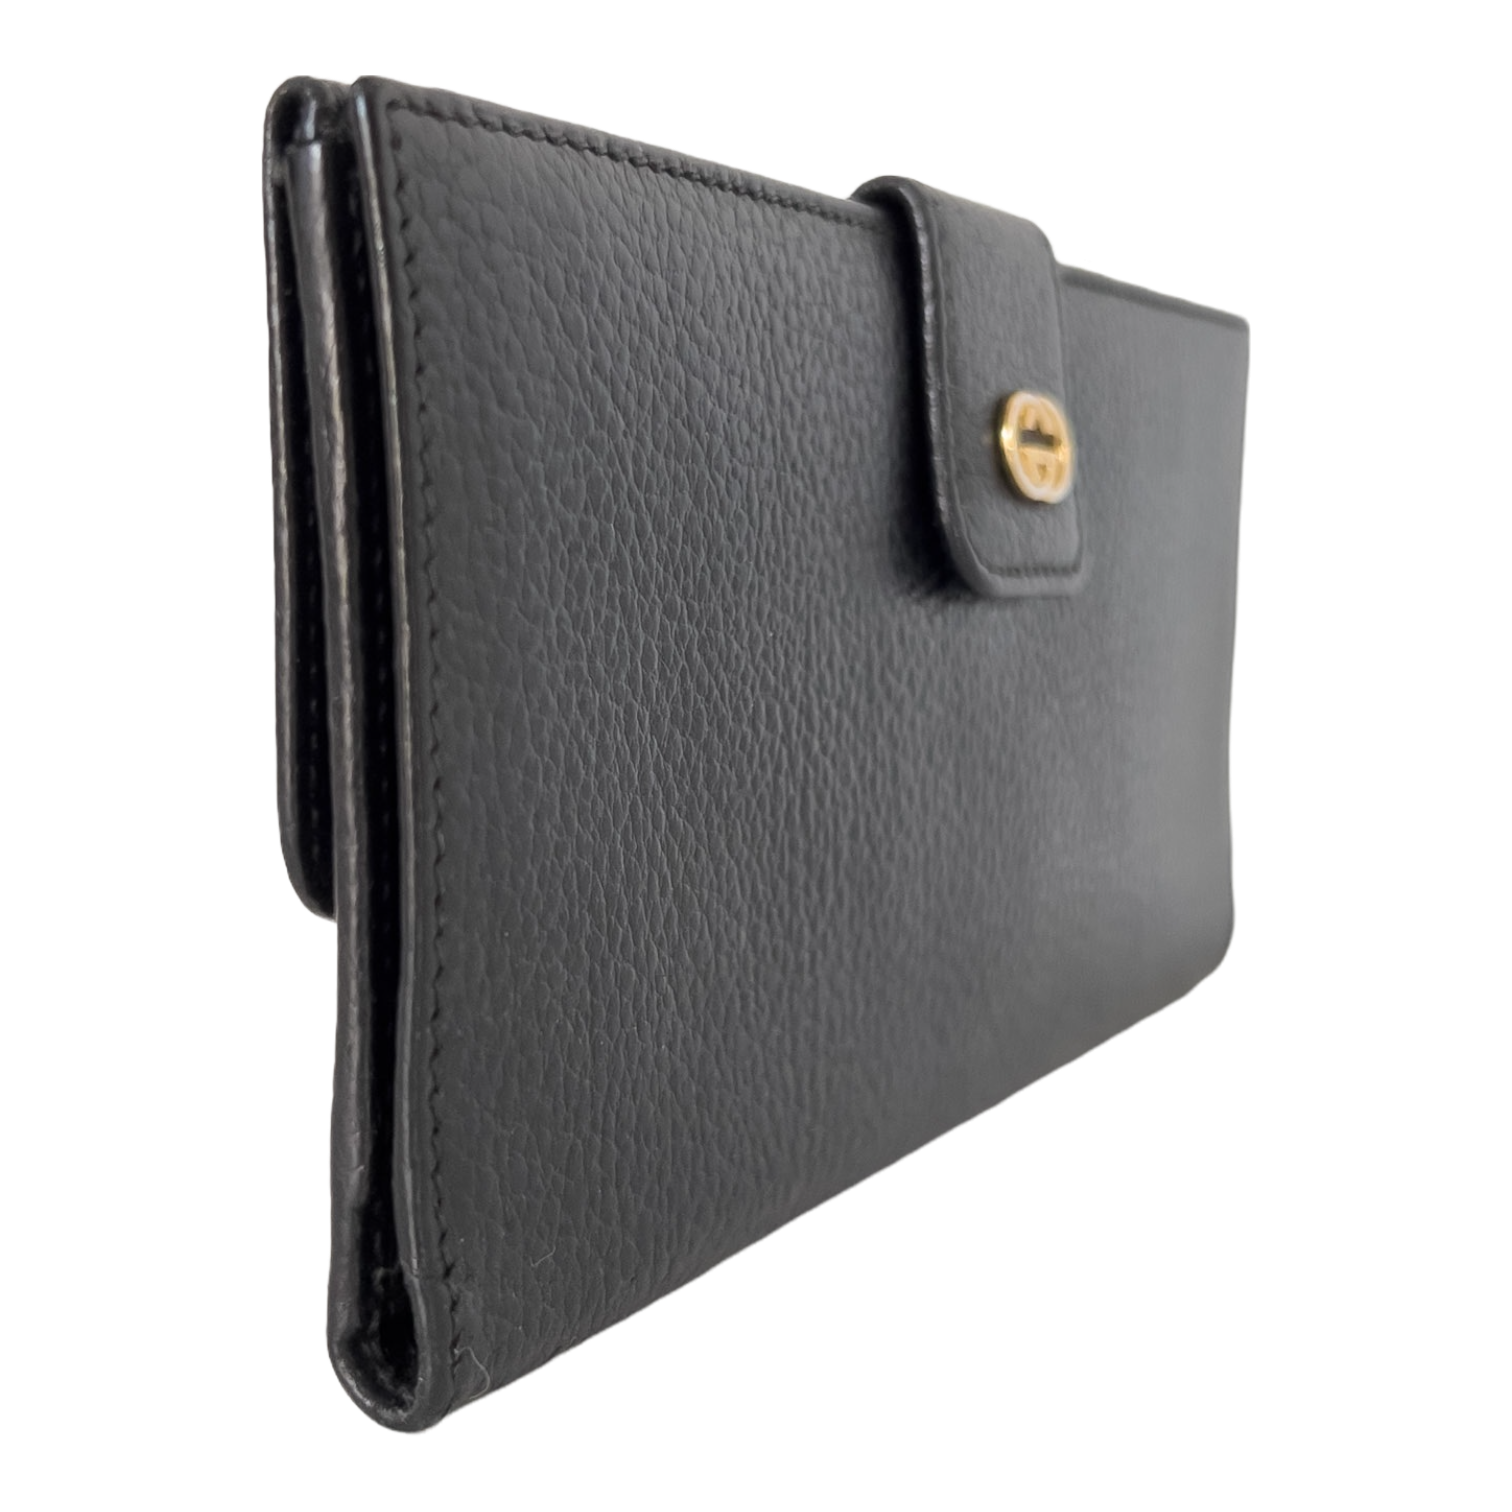 Black Leather Long Wallet